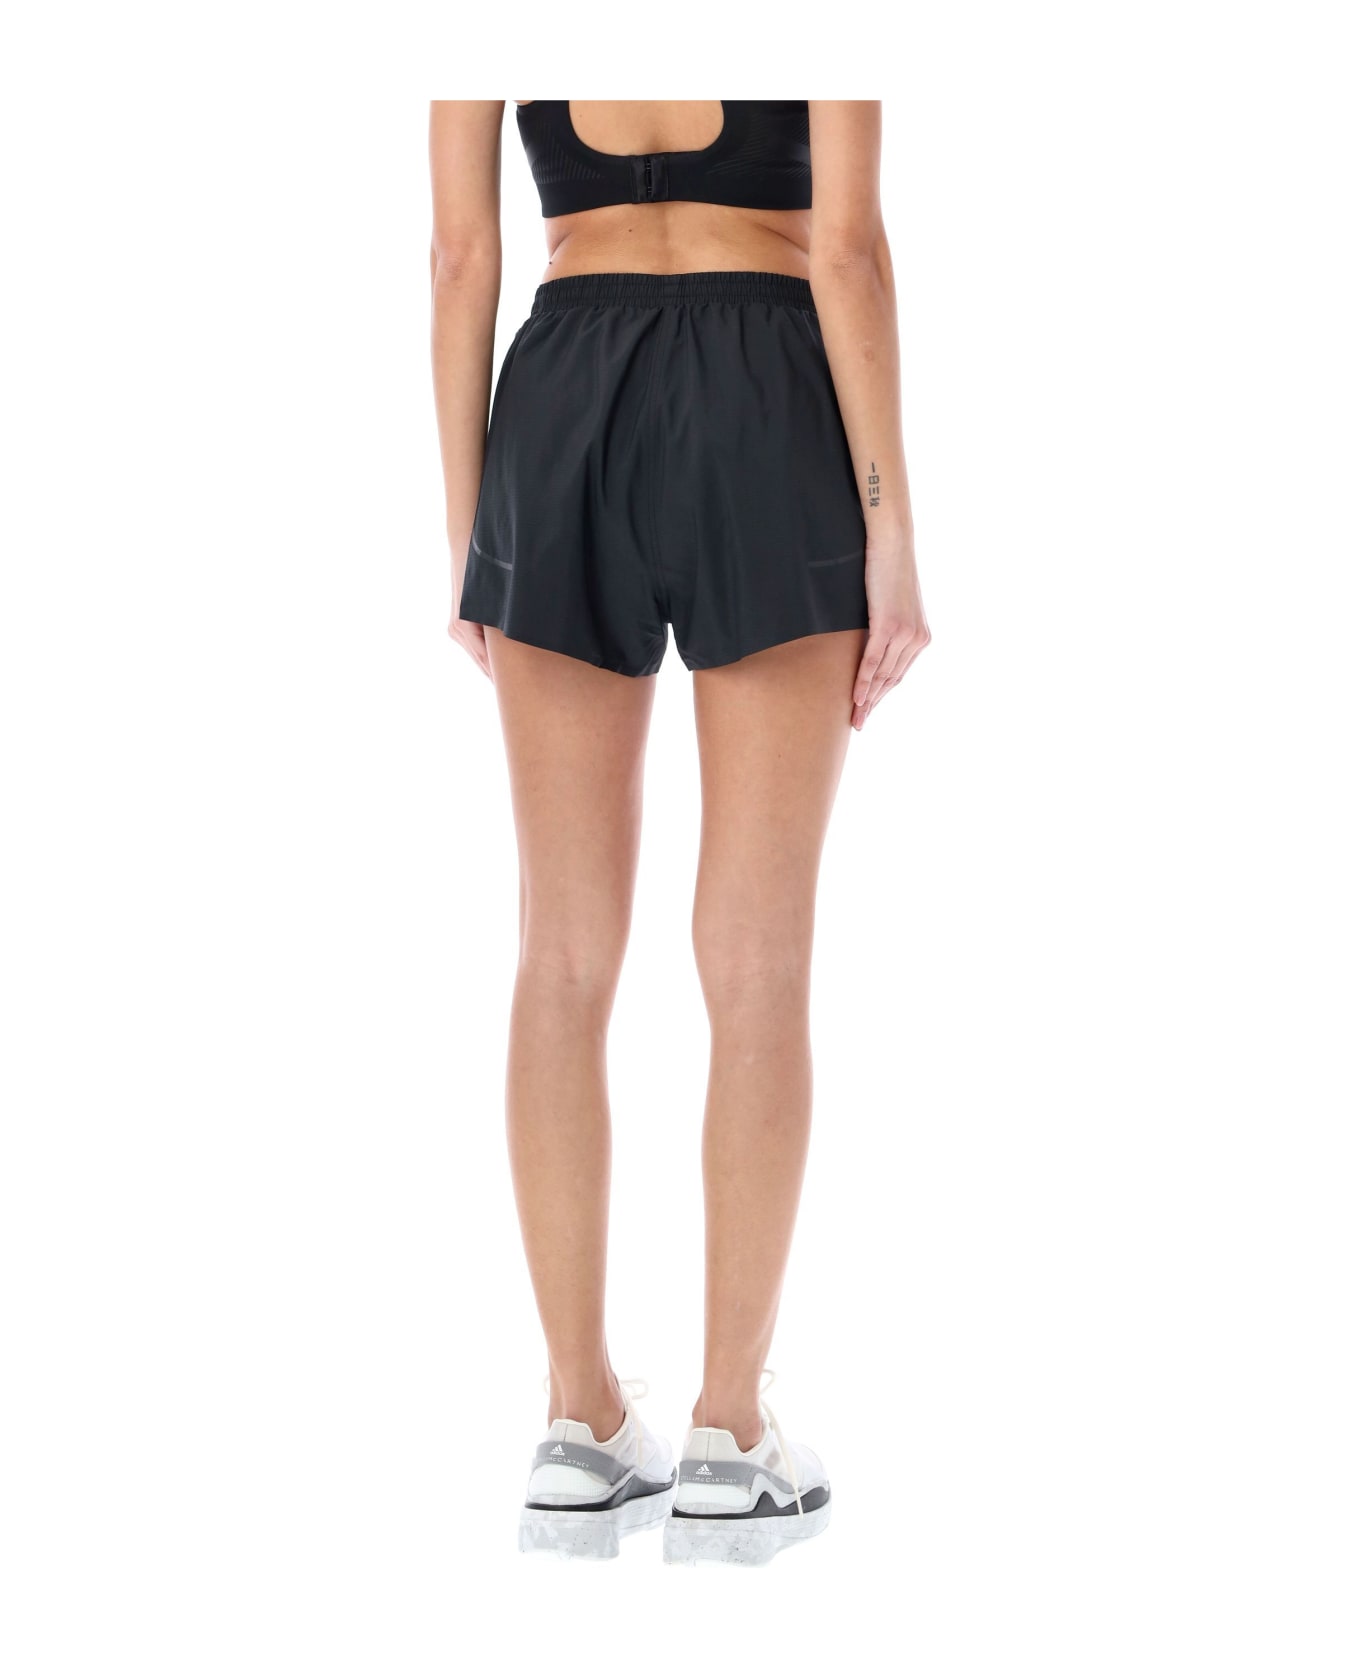 Adidas by Stella McCartney Truepace Running Shorts - BLACK